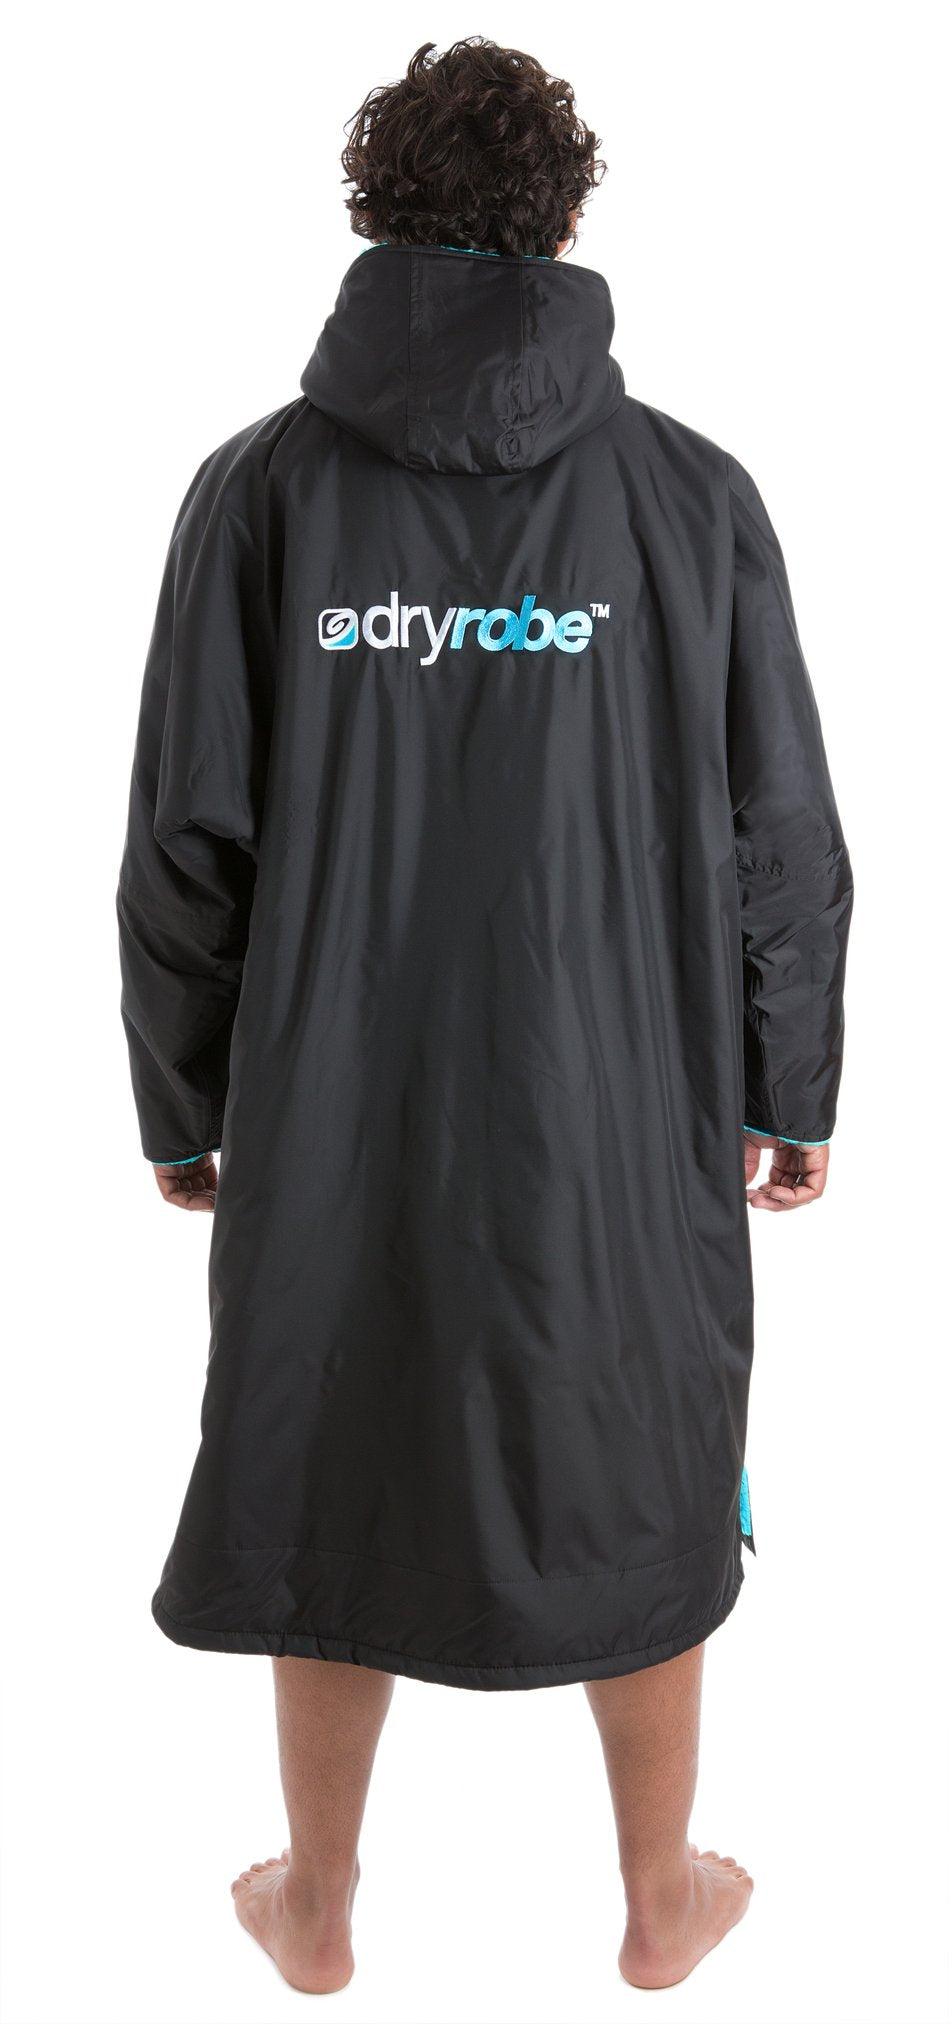 Dryrobe Long Sleeve Changing Robe - Black/ Blue